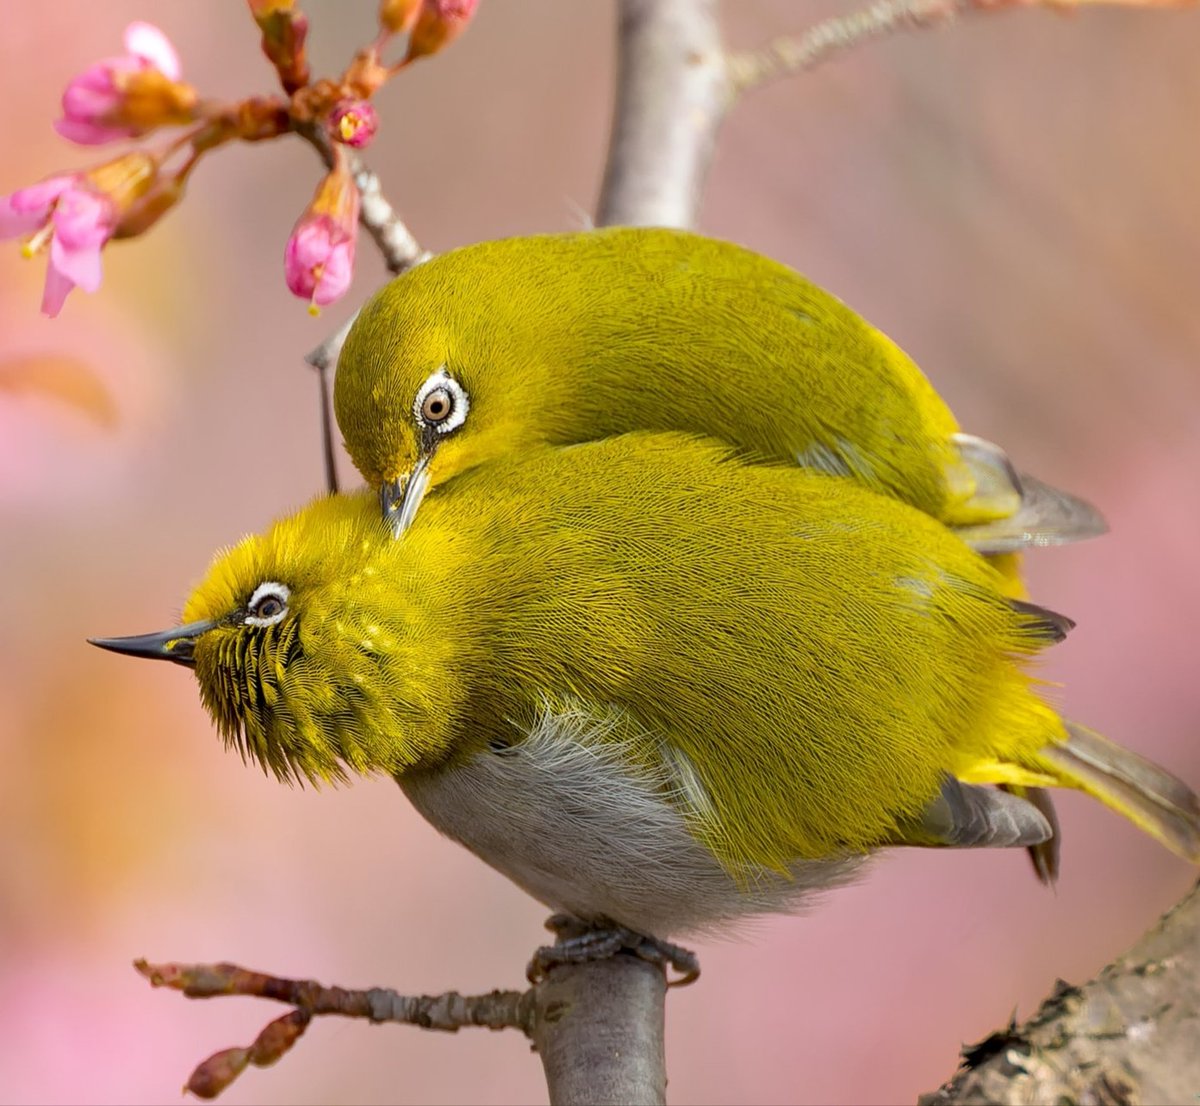 A romantic story of birds🎈 #birds #nature #photos #LovelyBirdsInChina